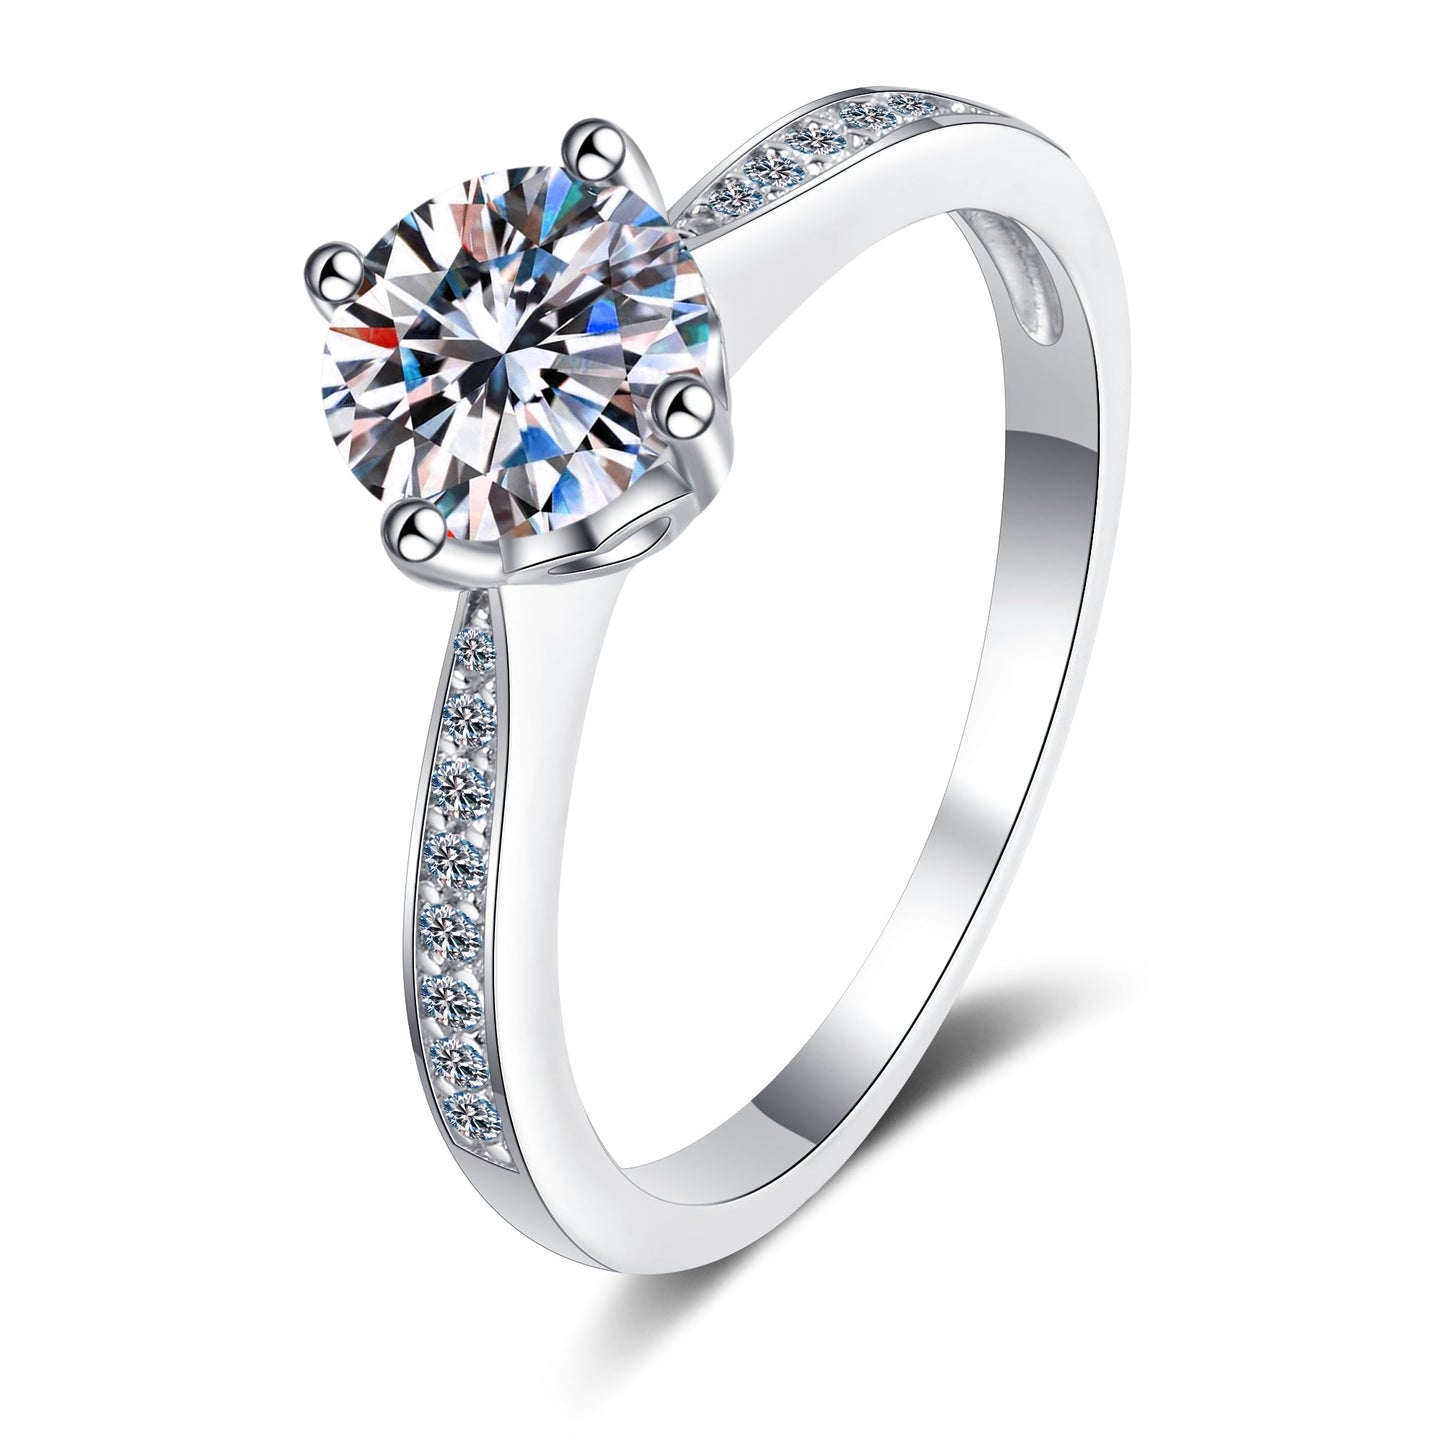 3 CT MOISSANITE Diamond Engagement Solitaire Ring, 925 Silver, Elegant Wedding Ring, PT950, Passes Diamond Tester az232 Xaxe.com